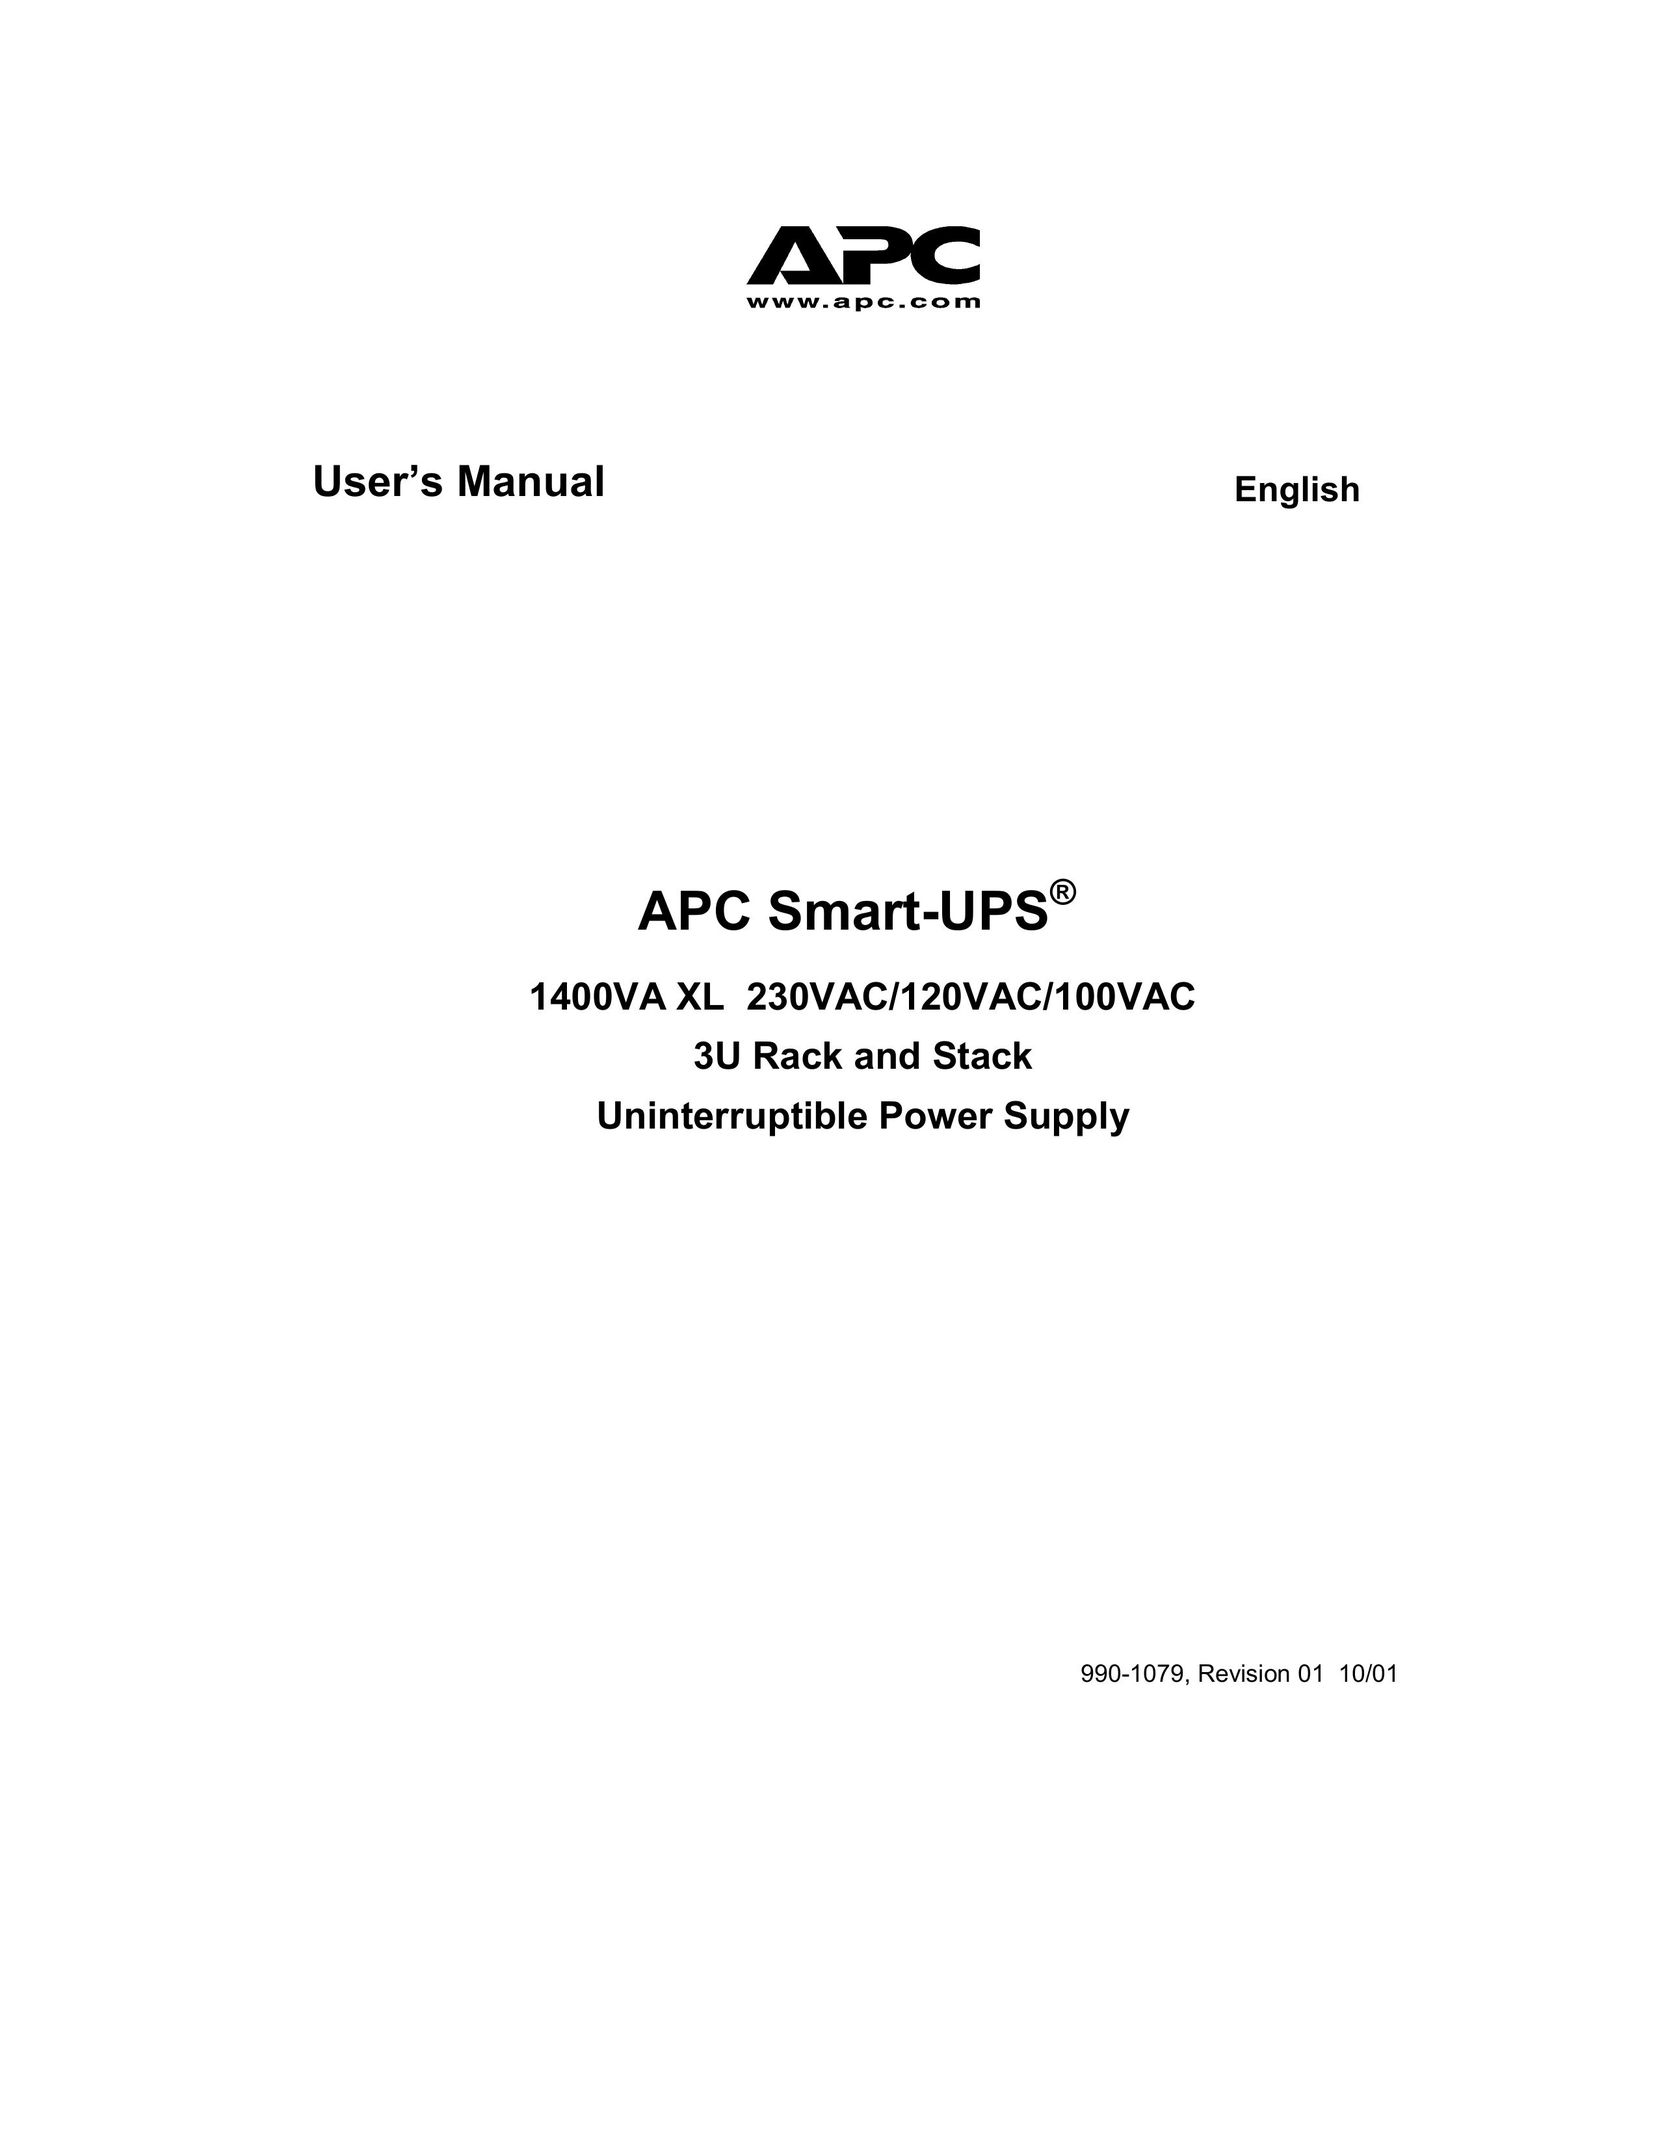 American Power Conversion 230VAC Power Supply User Manual